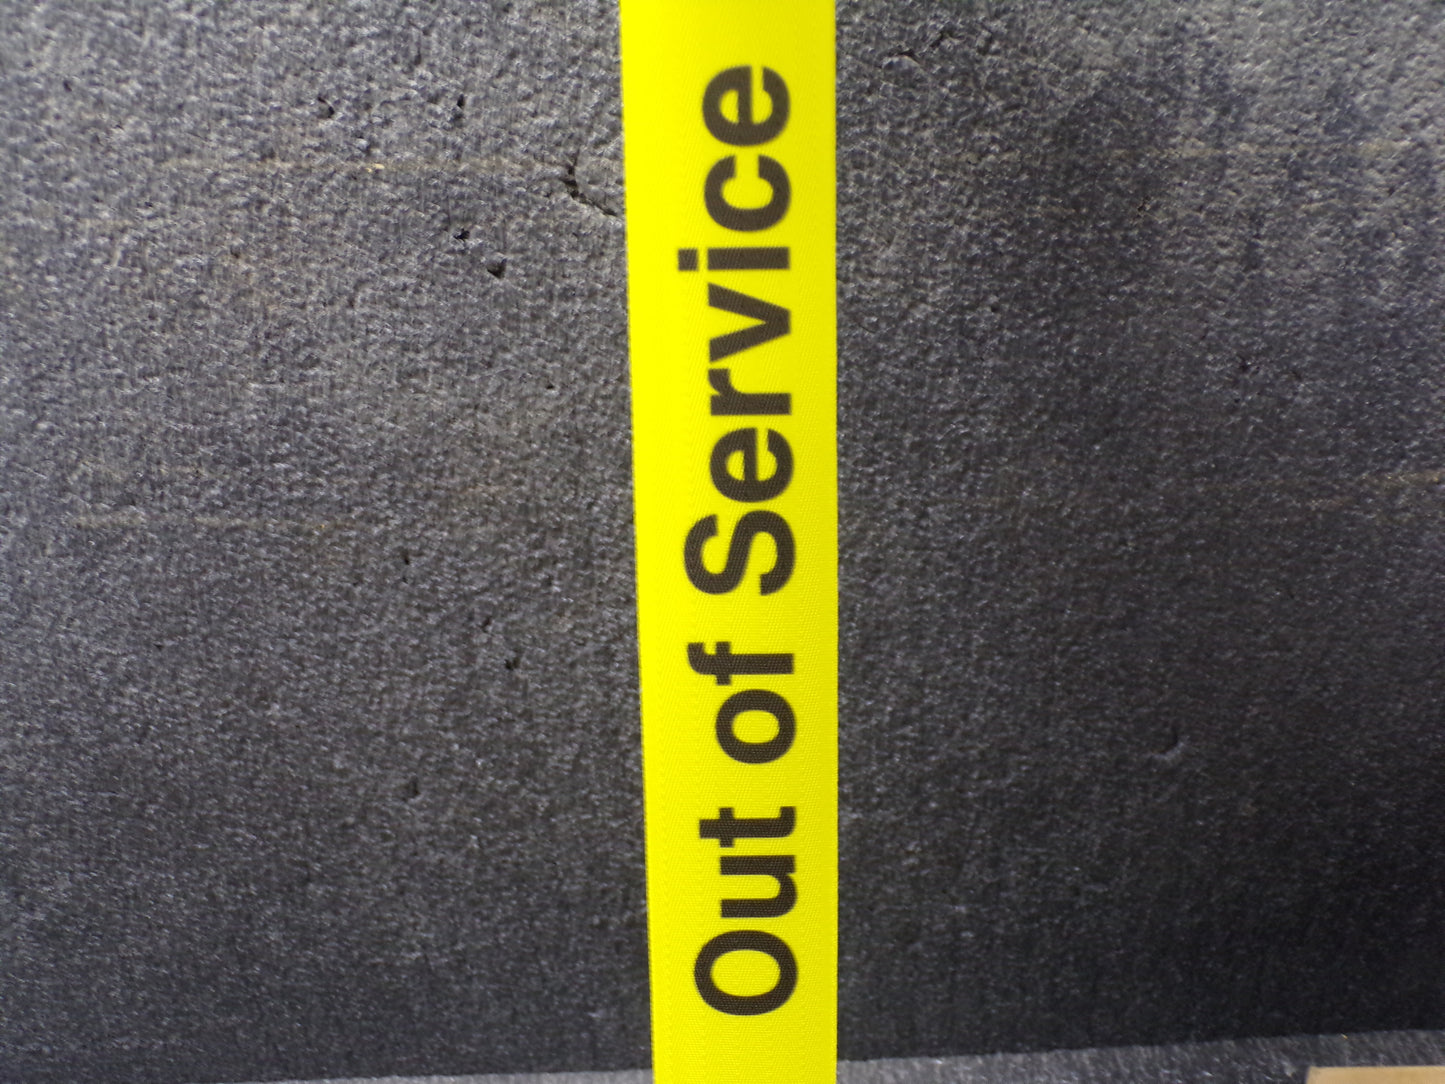 TENSABARRIER Retractable Belt Barrier, Yellow Belt With Black Writing, Out of Service (CR00073-BT23)